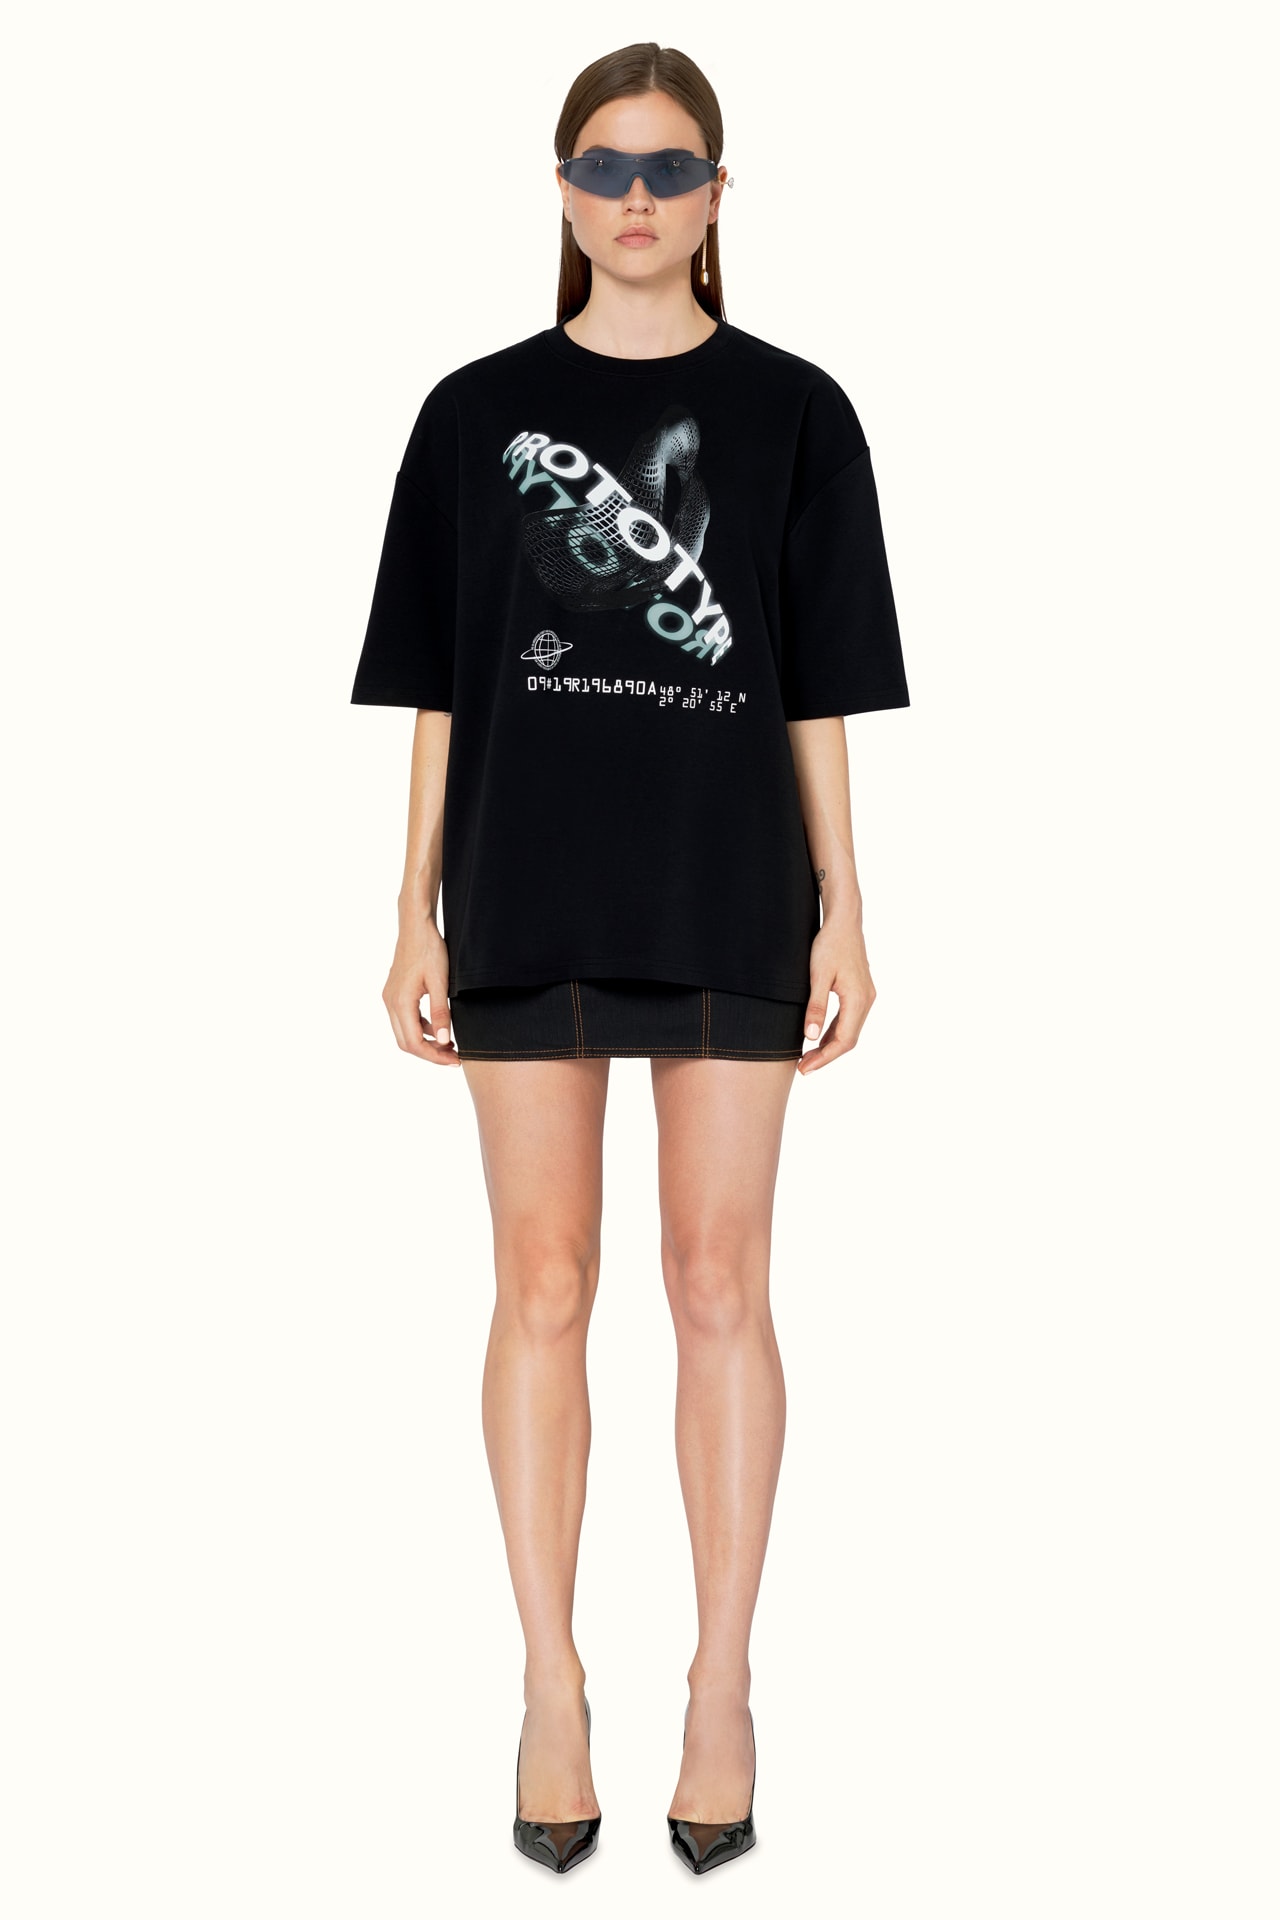 FENTY Rihanna Release 9-19 Collection Lookbook Shirt Skirt Black